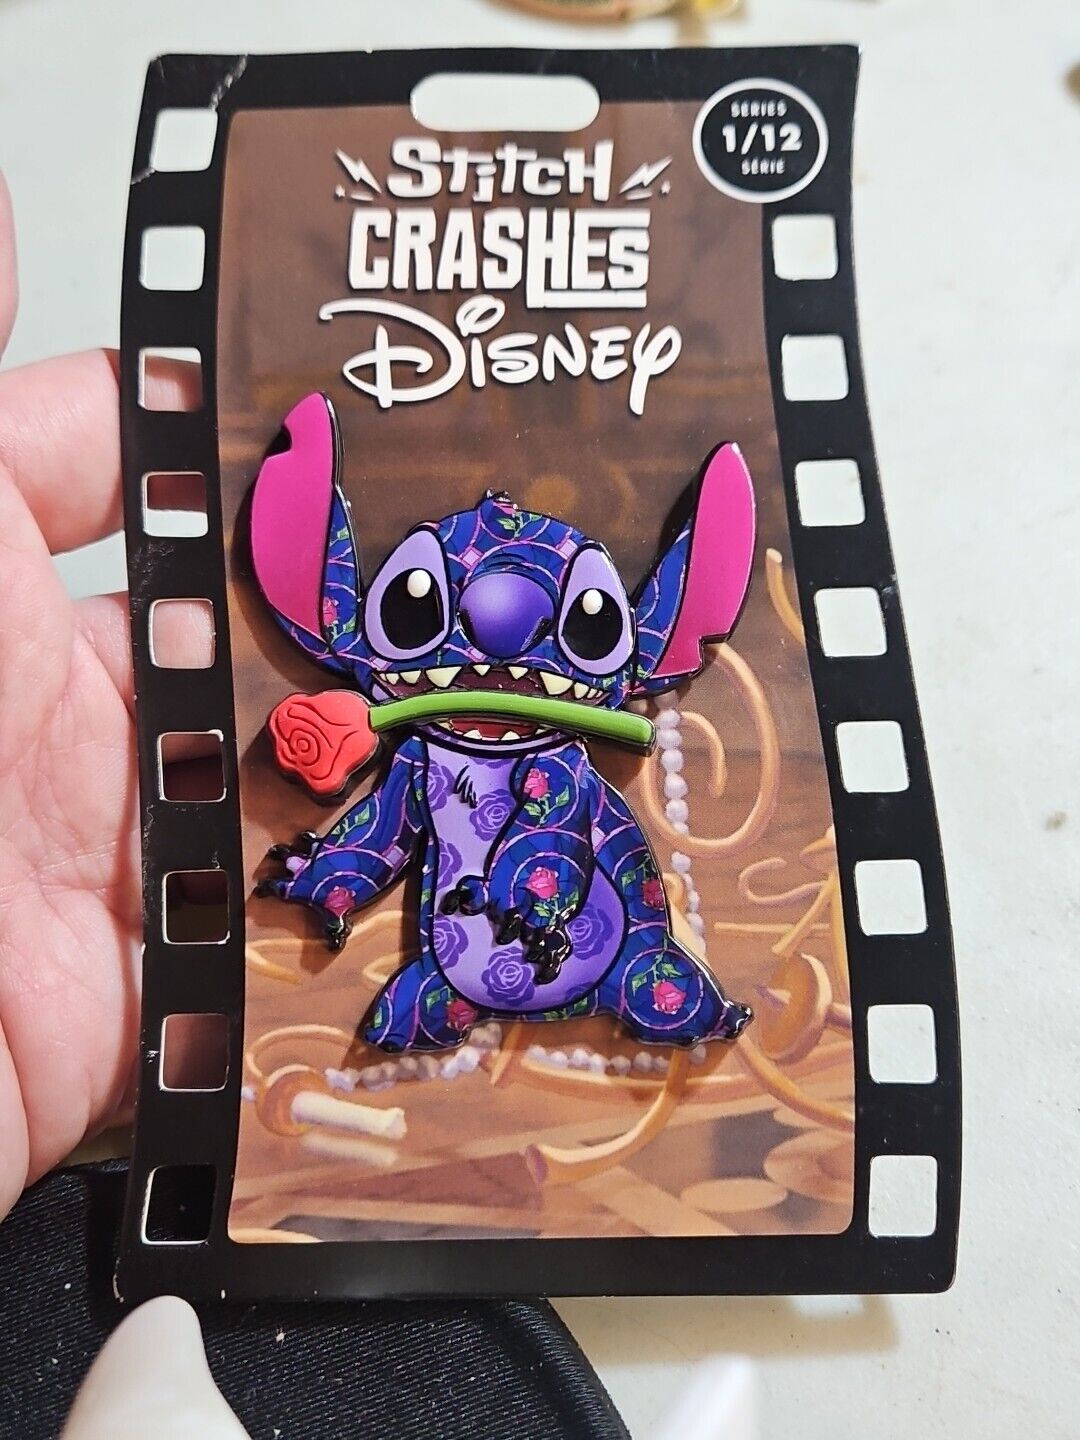 Disney Pin Stitch Crashes Disney Beauty and the Beast Jumbo Pin Release 1/12 UK